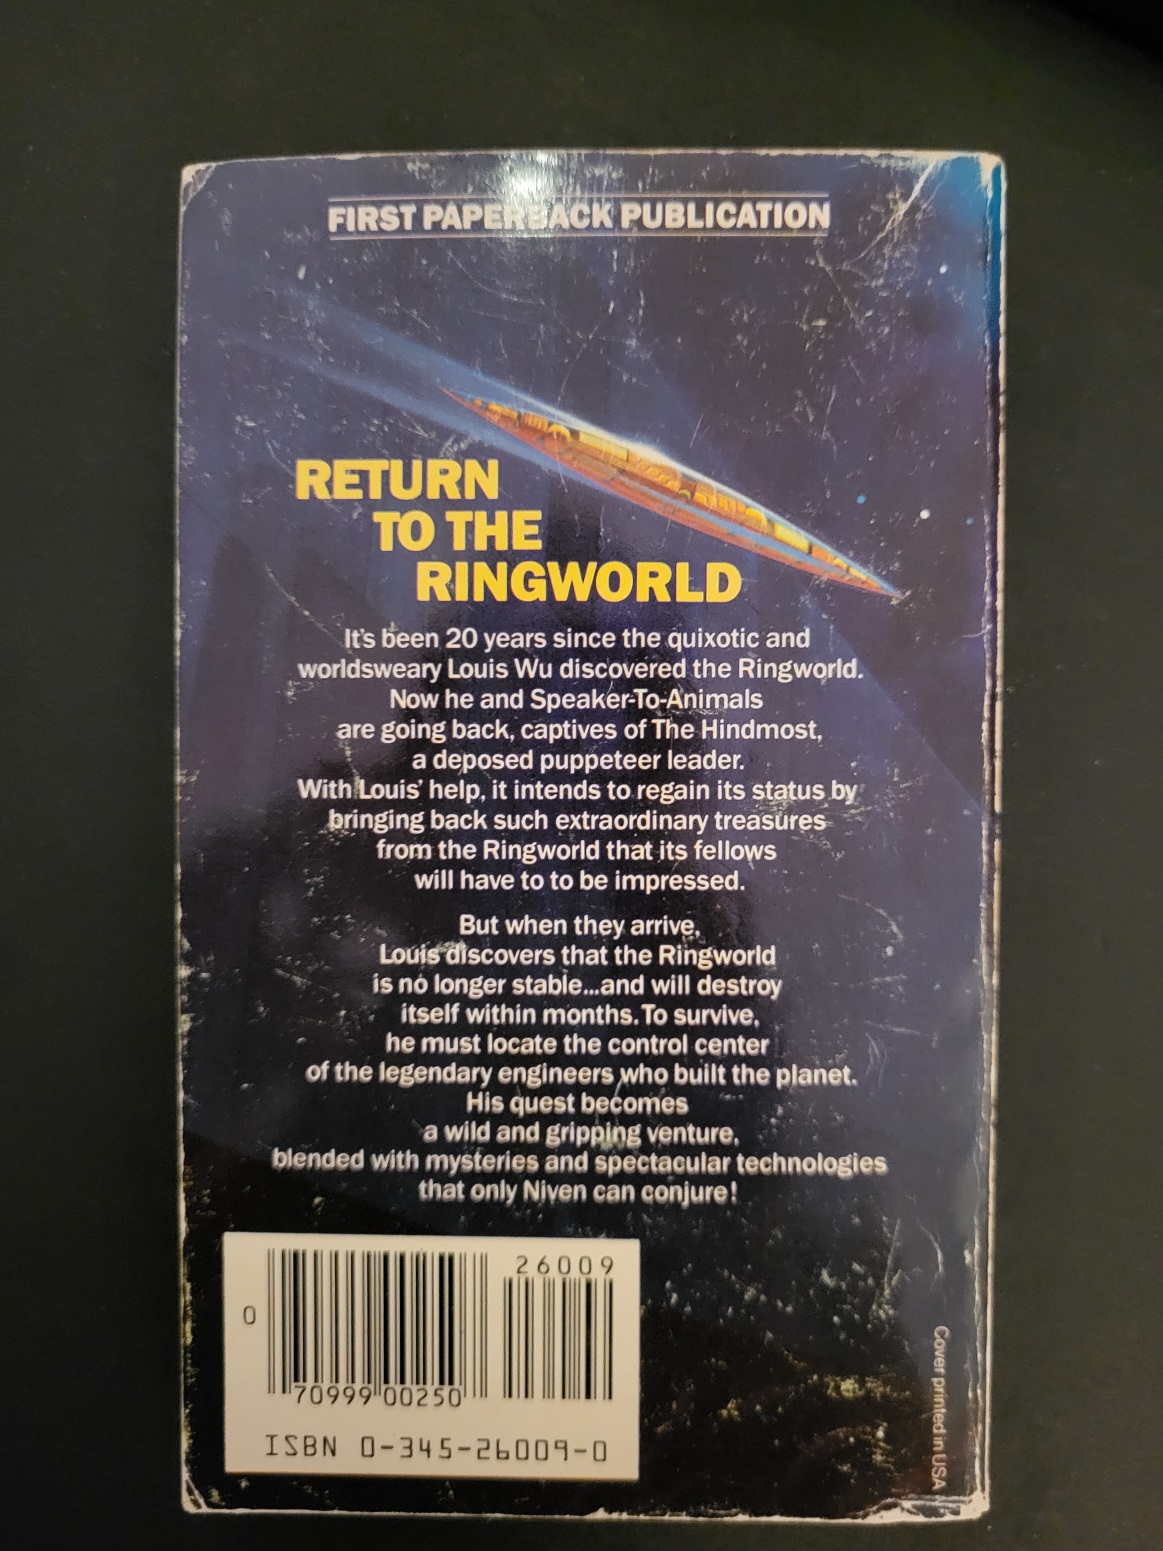 Larry Niven The Ringworld Series – 3 paperbacks Del Rey Set 1980s